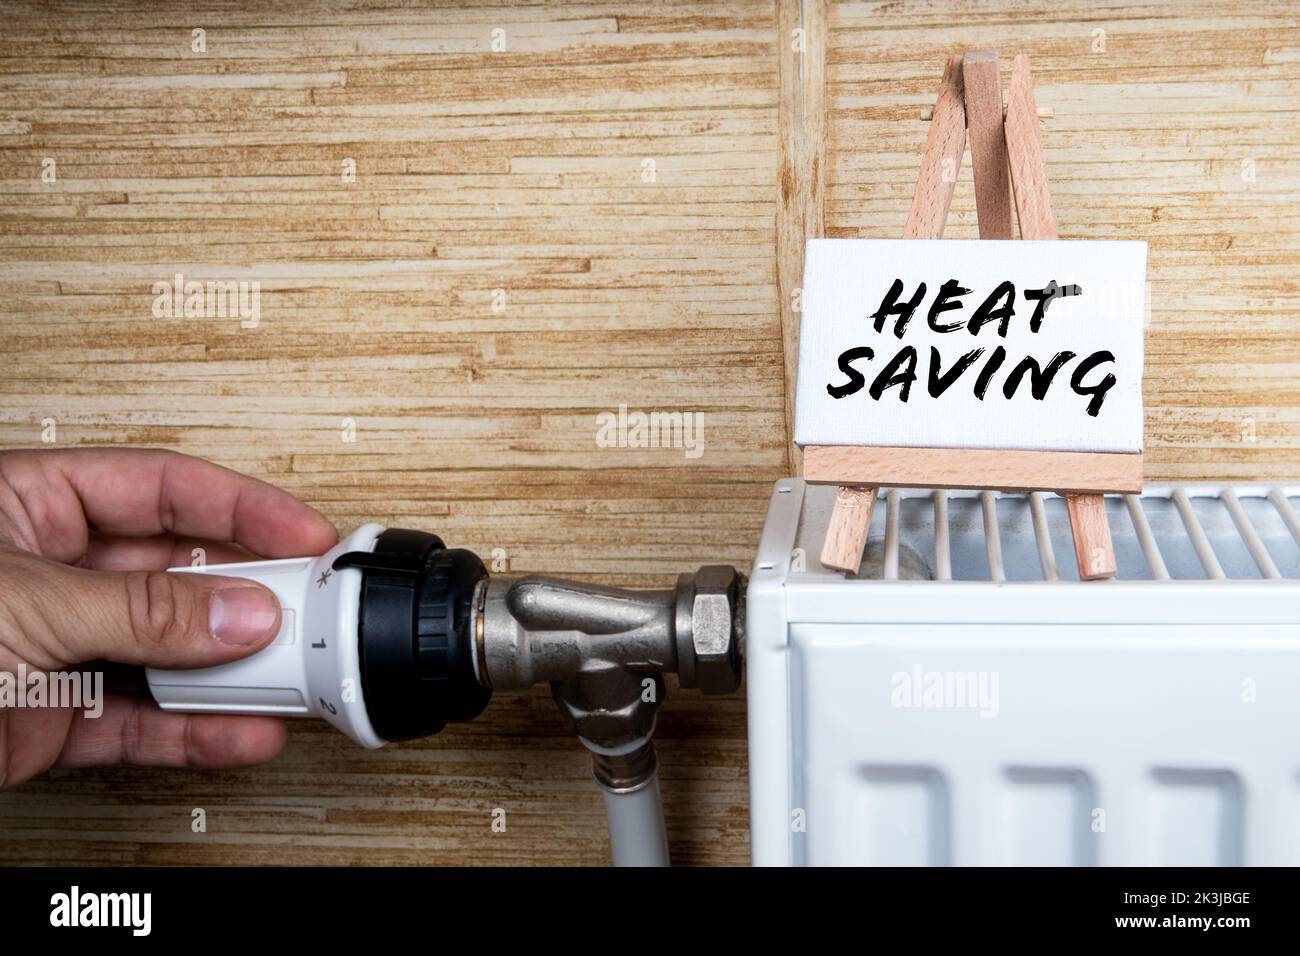 Heat Saving. Turning down thermostat on radiator to save energy. Stock Photo